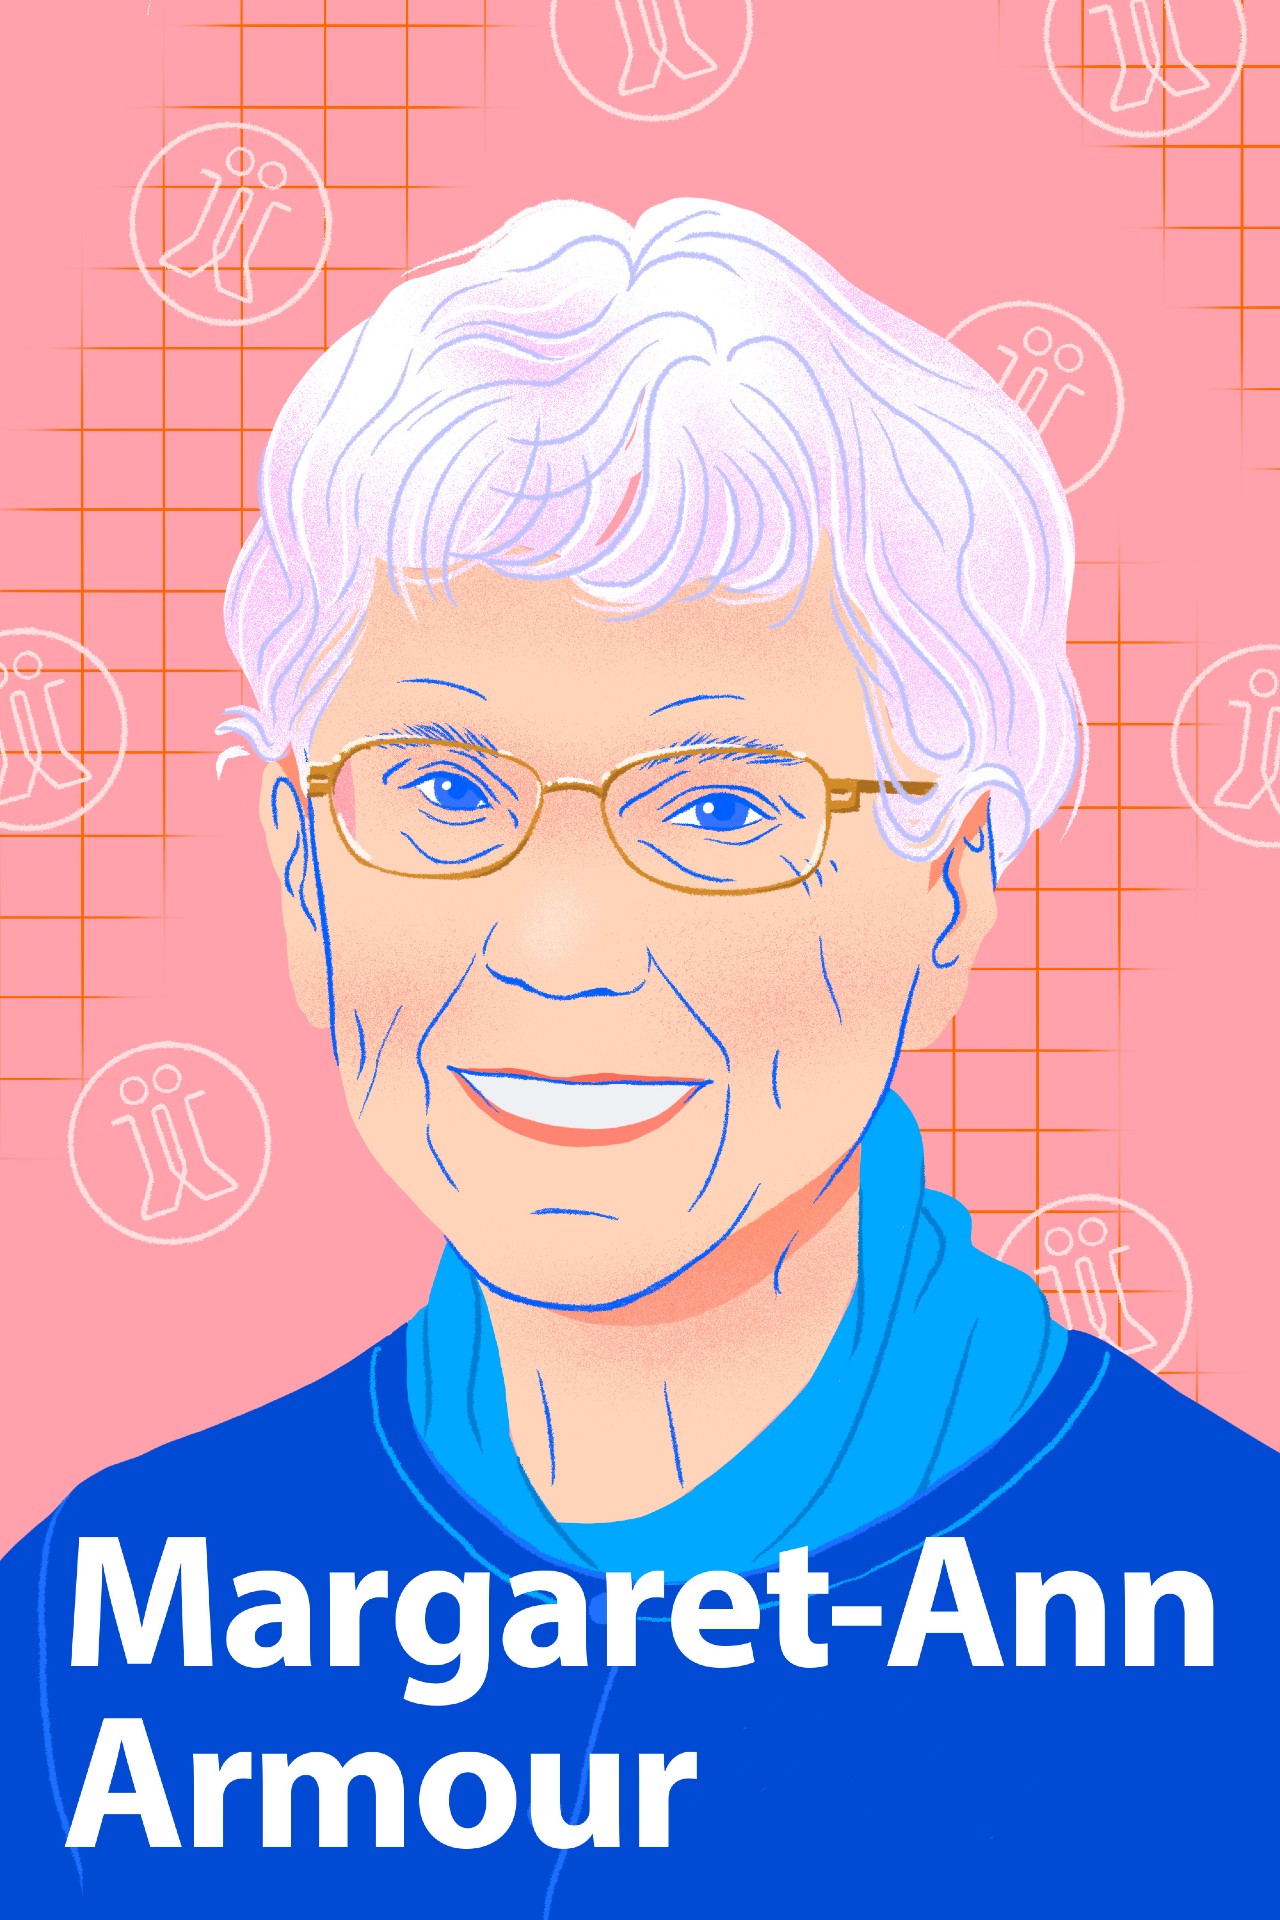 Dr. Margaret-Ann Armour.